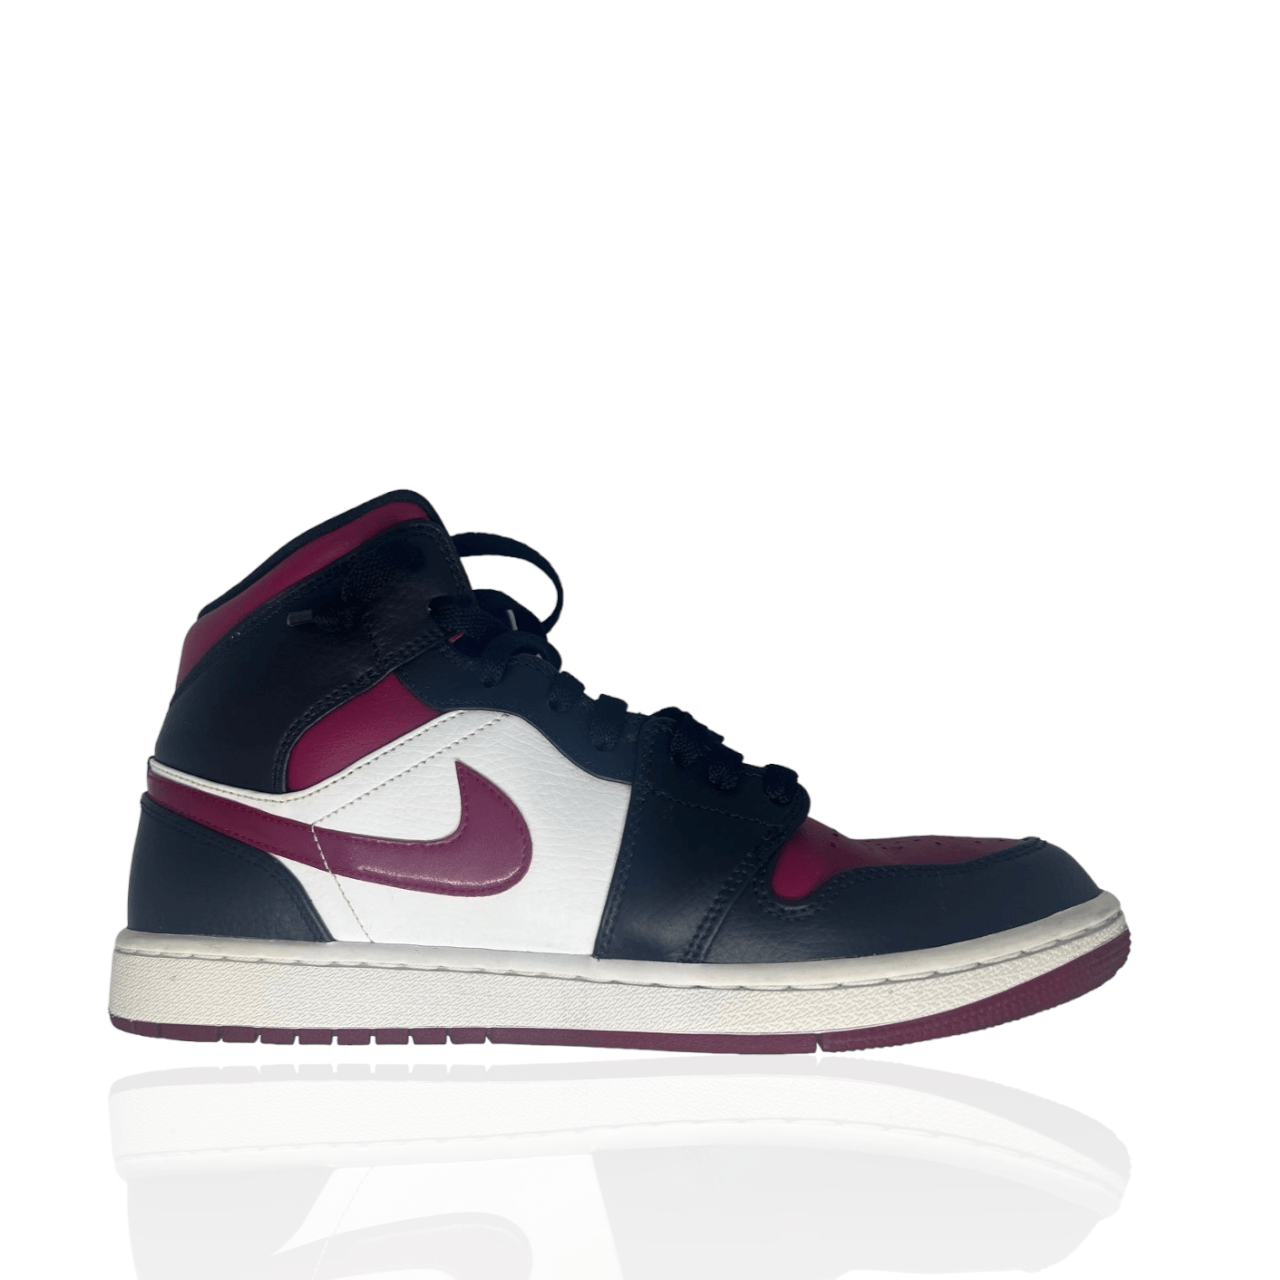 Air Jordan Mid Bred Toe Sneakers